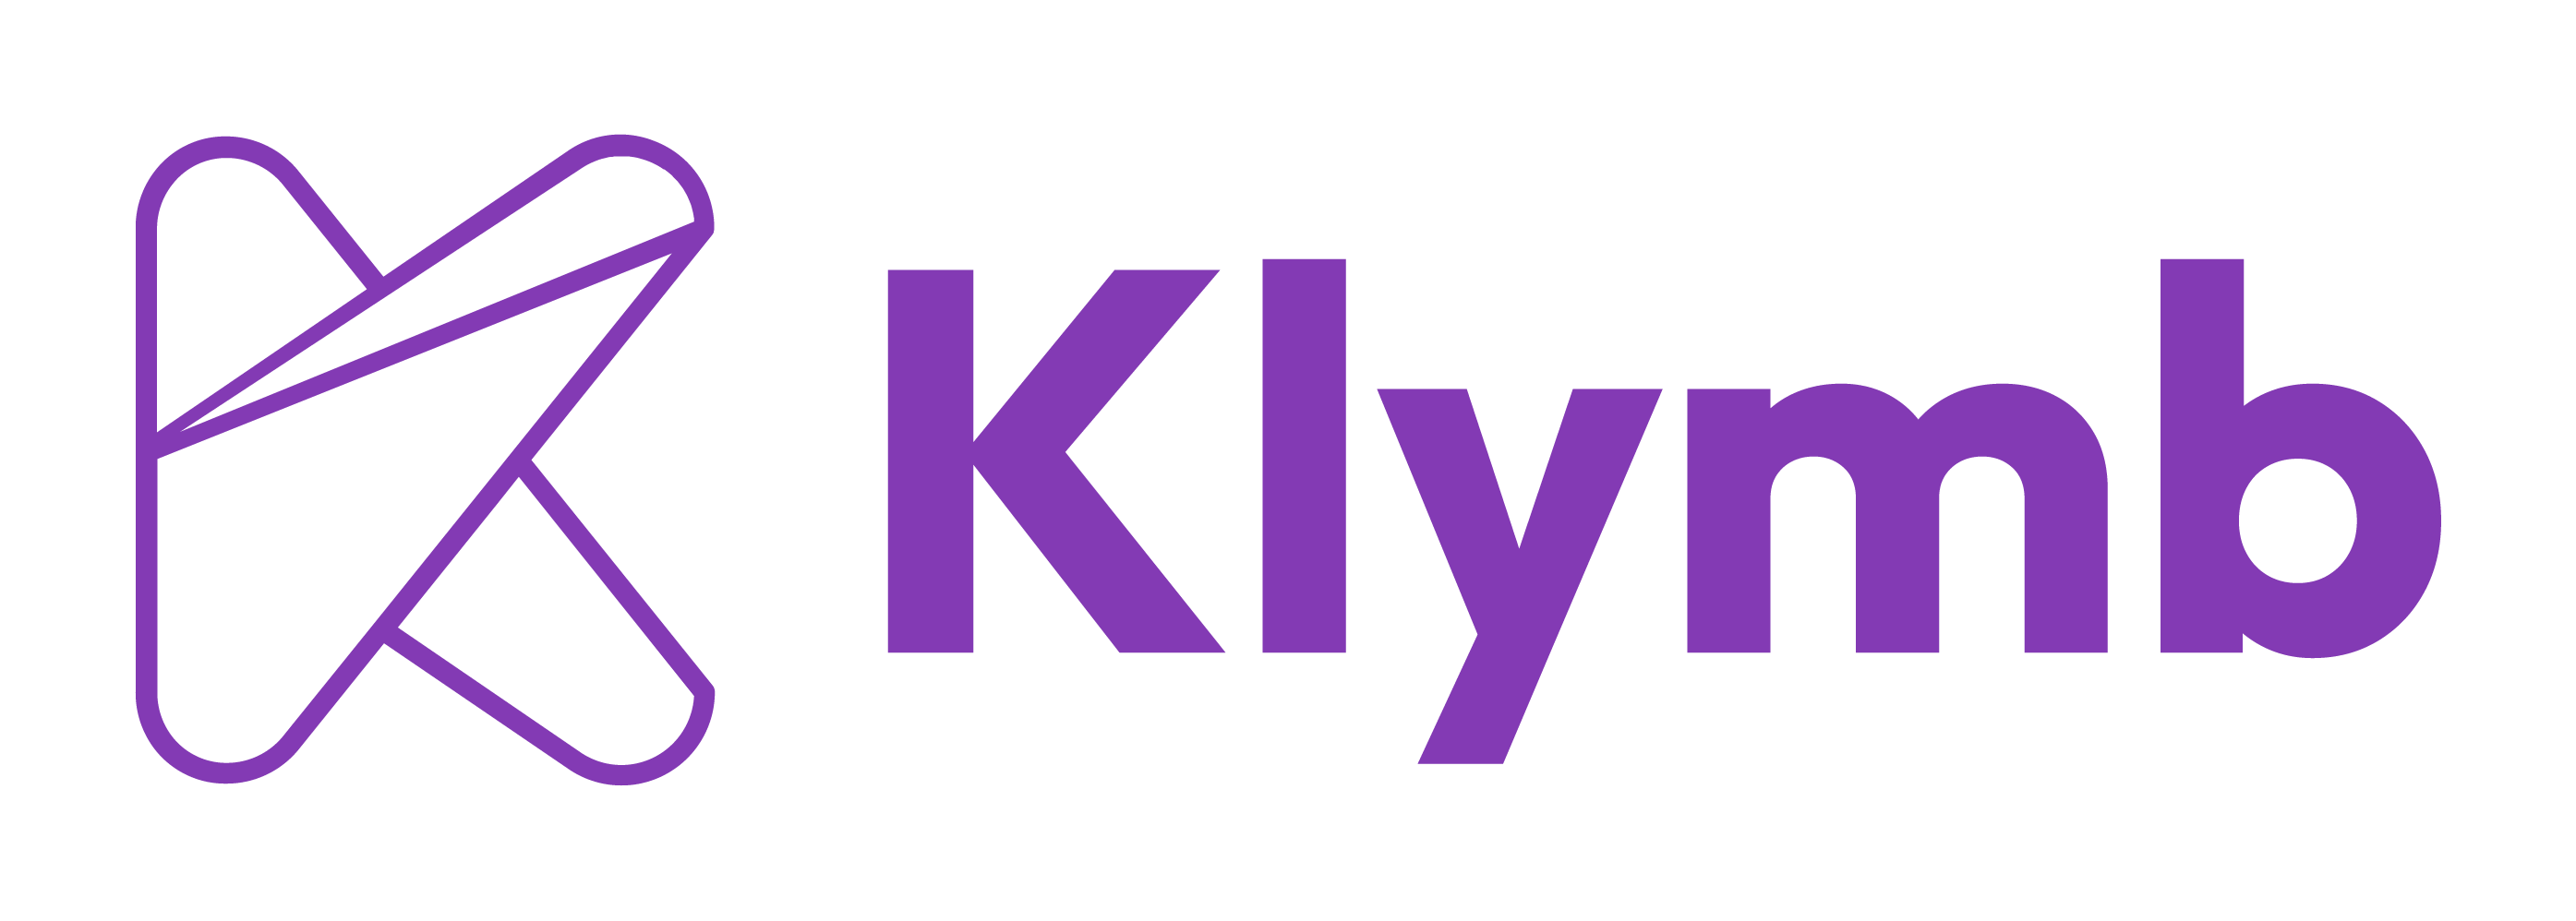 Klymb's logo